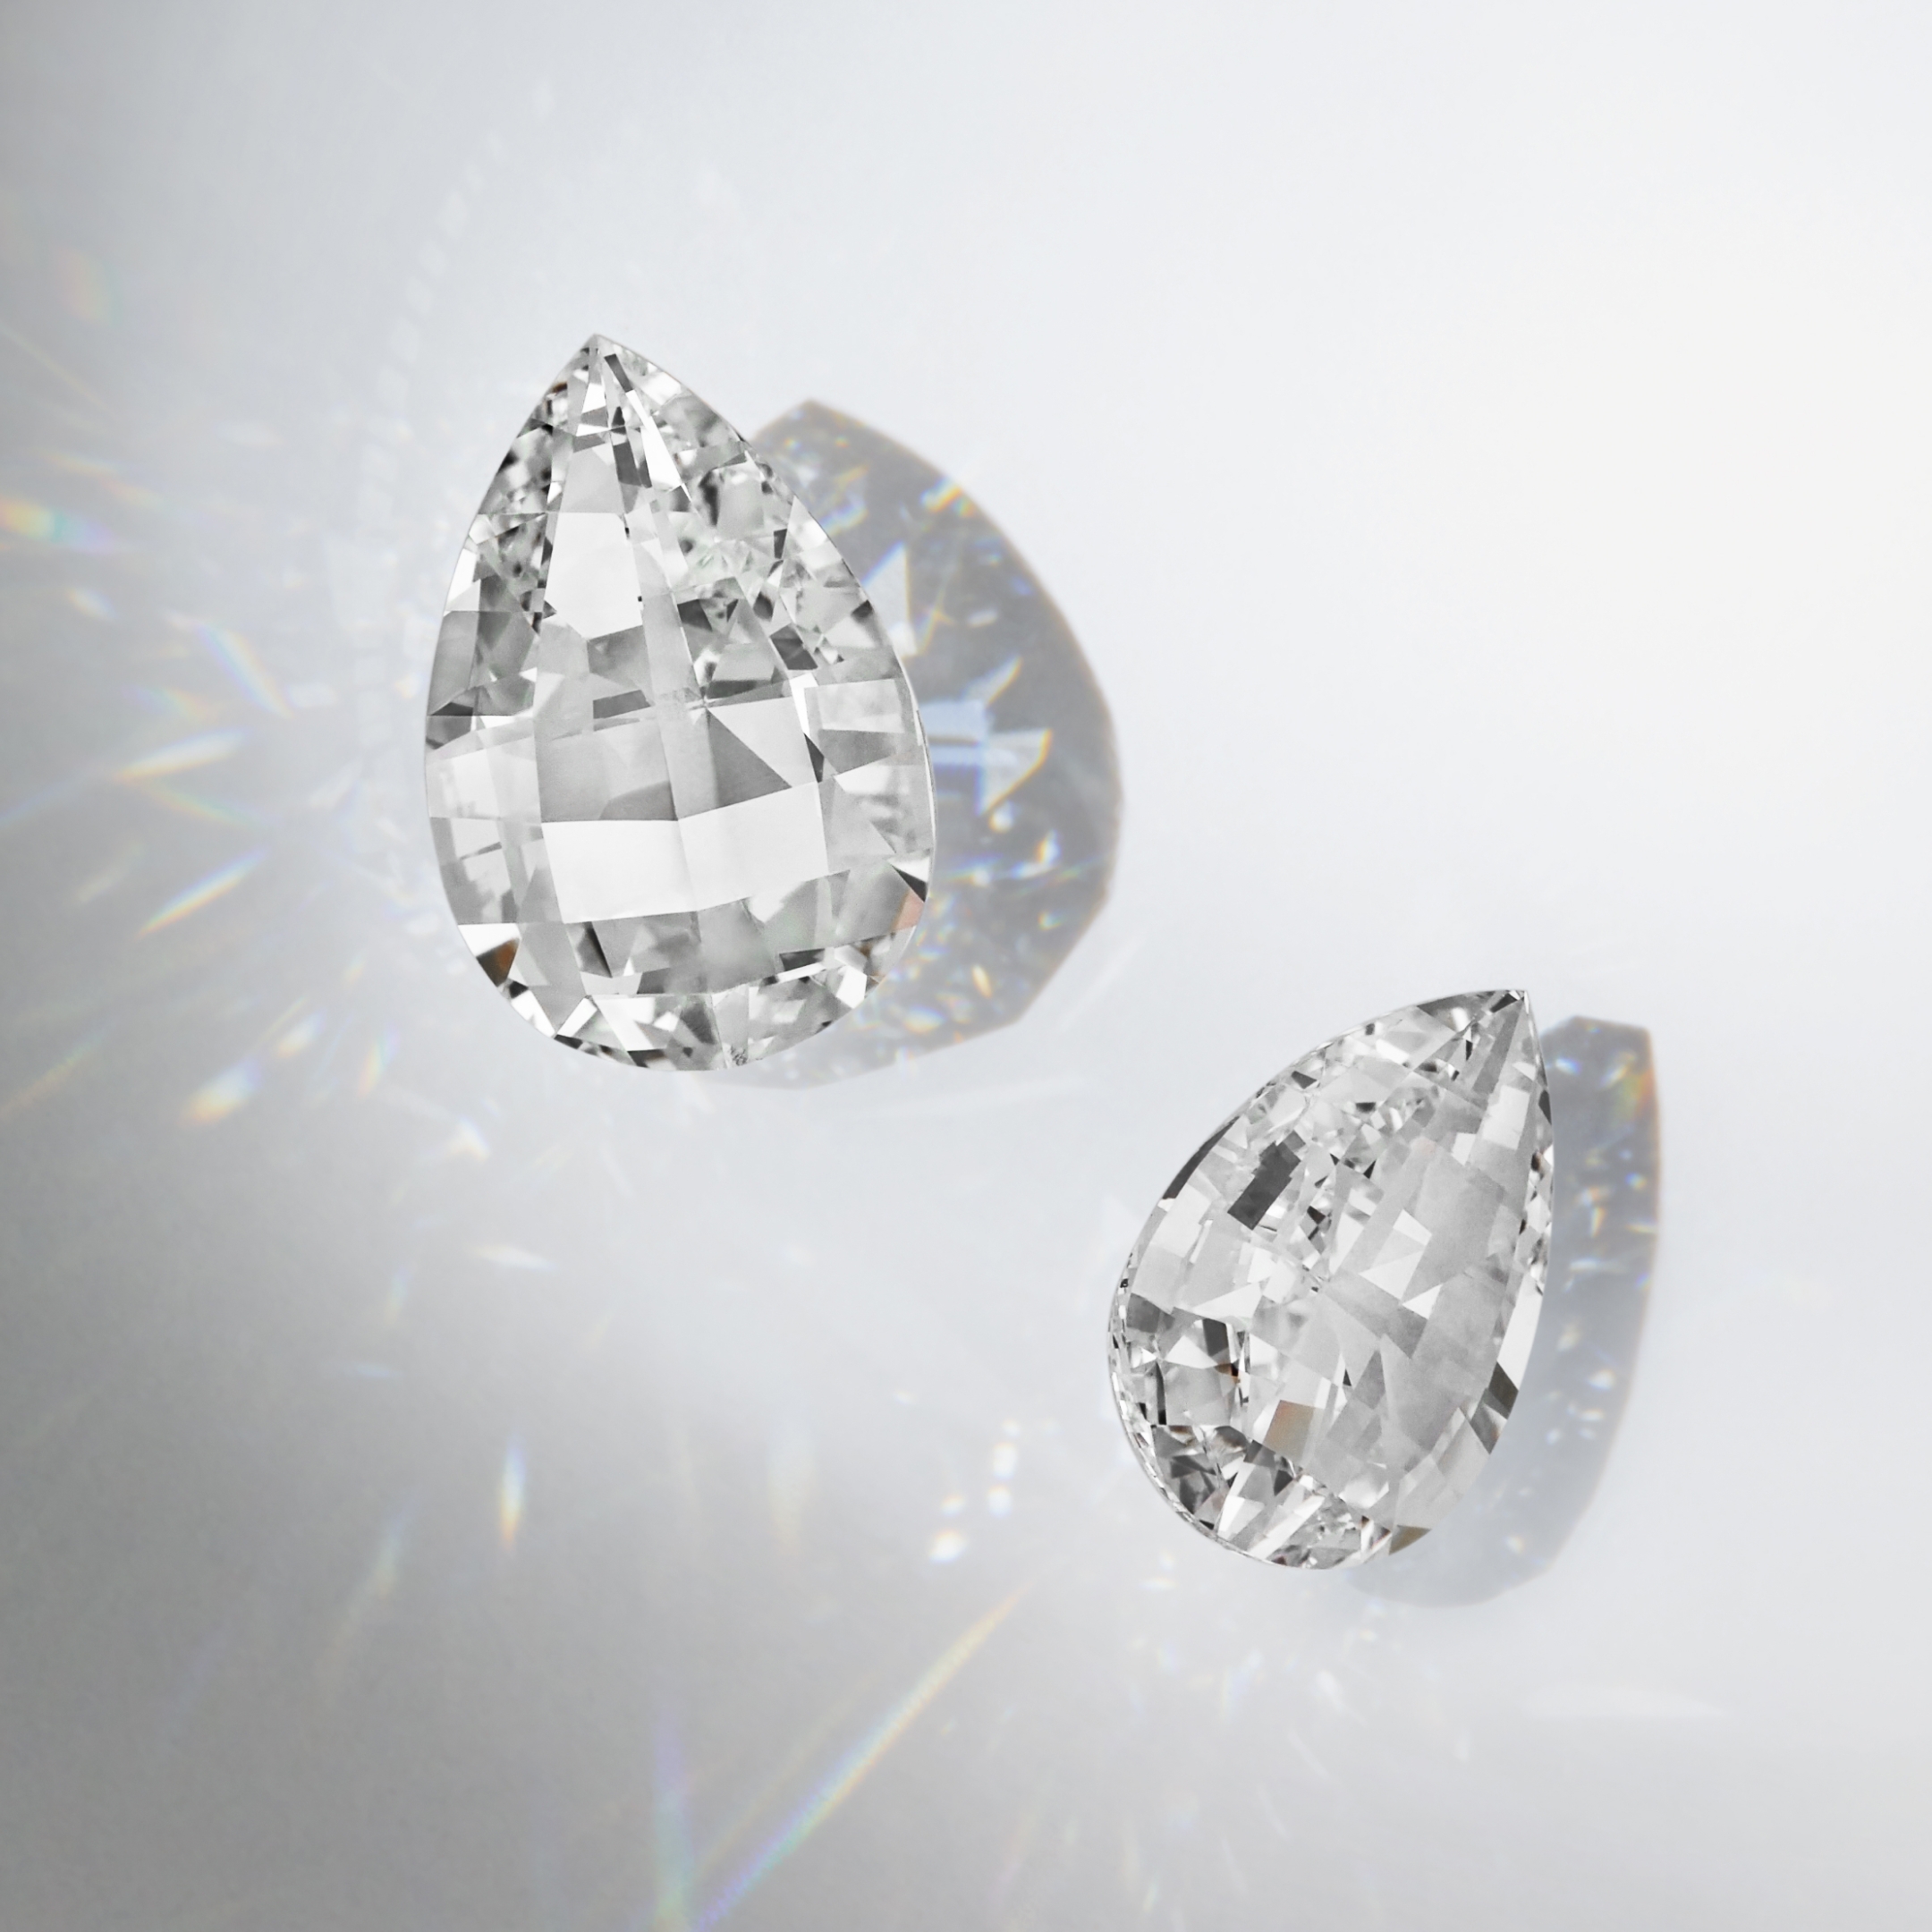 Unsaid iconic diamond cuts